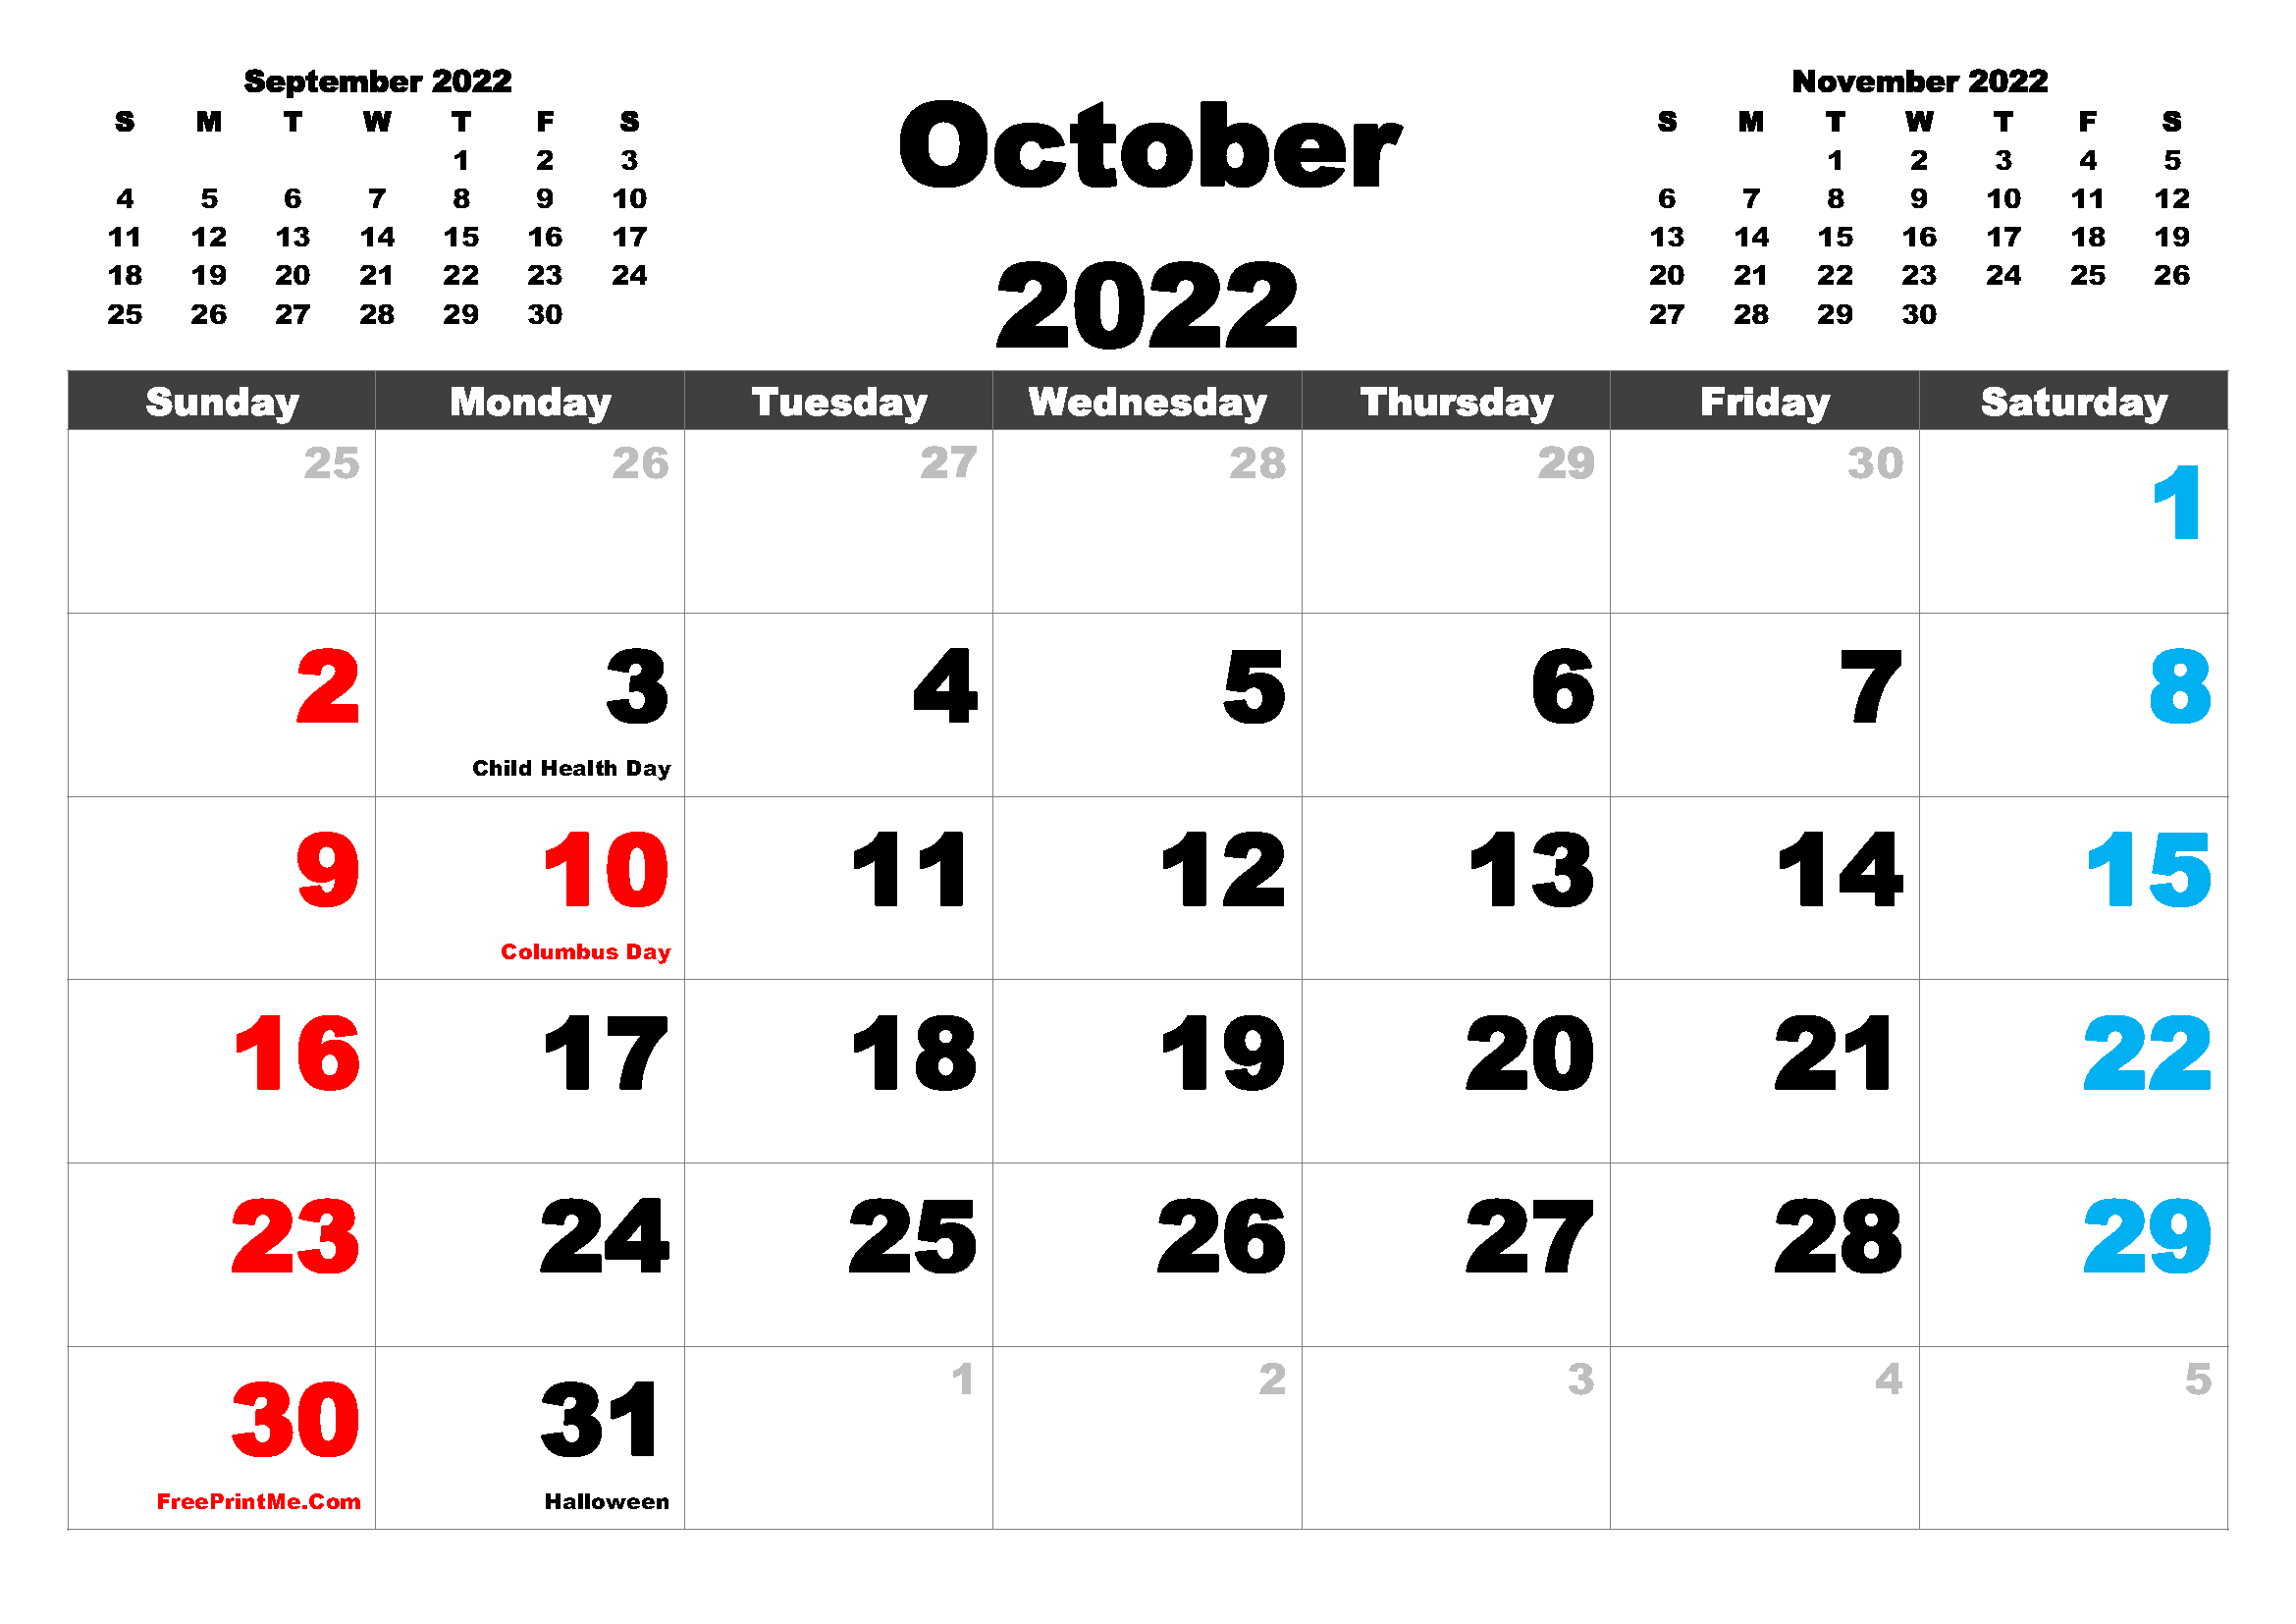 Free Printable October Calendar 2022 Free Printable October 2022 Calendar Pdf, Png Image